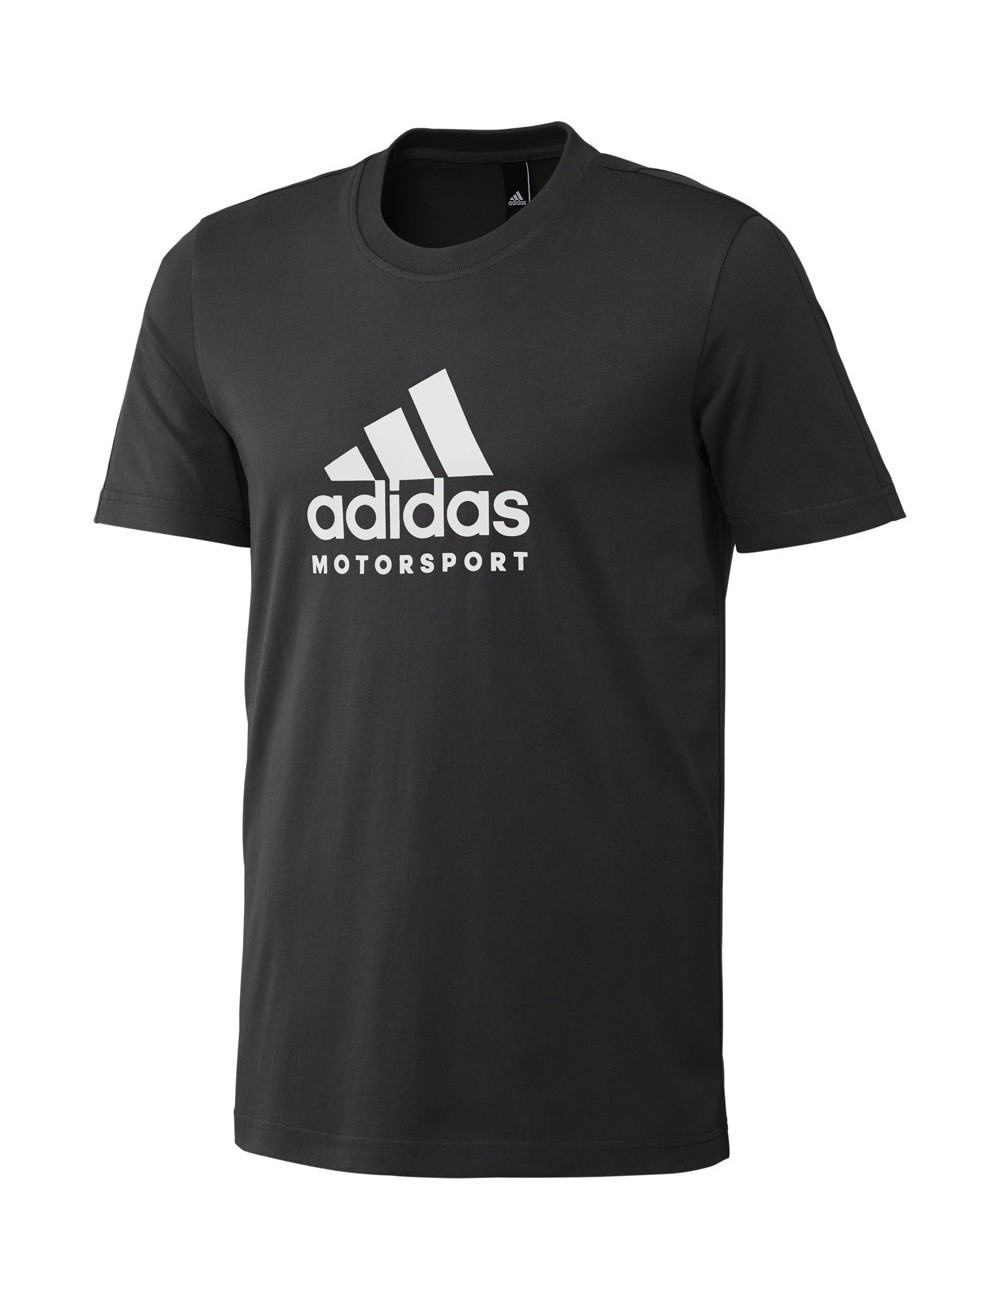 T-shirt Adidas Motorsport λευκό / μαύρο